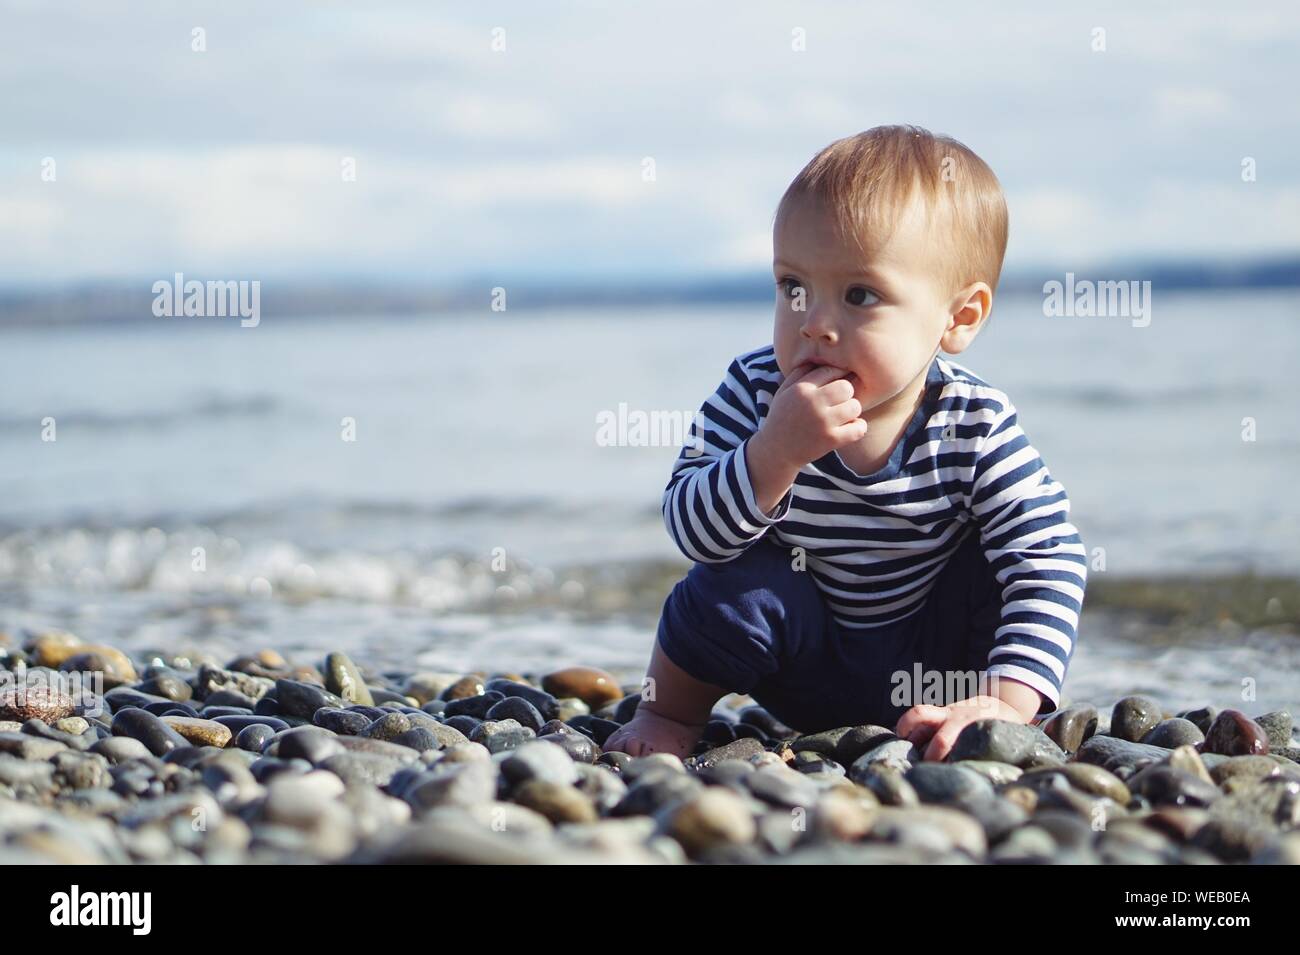 Baby Sitting On Pebbles At Seashore Stock Photo